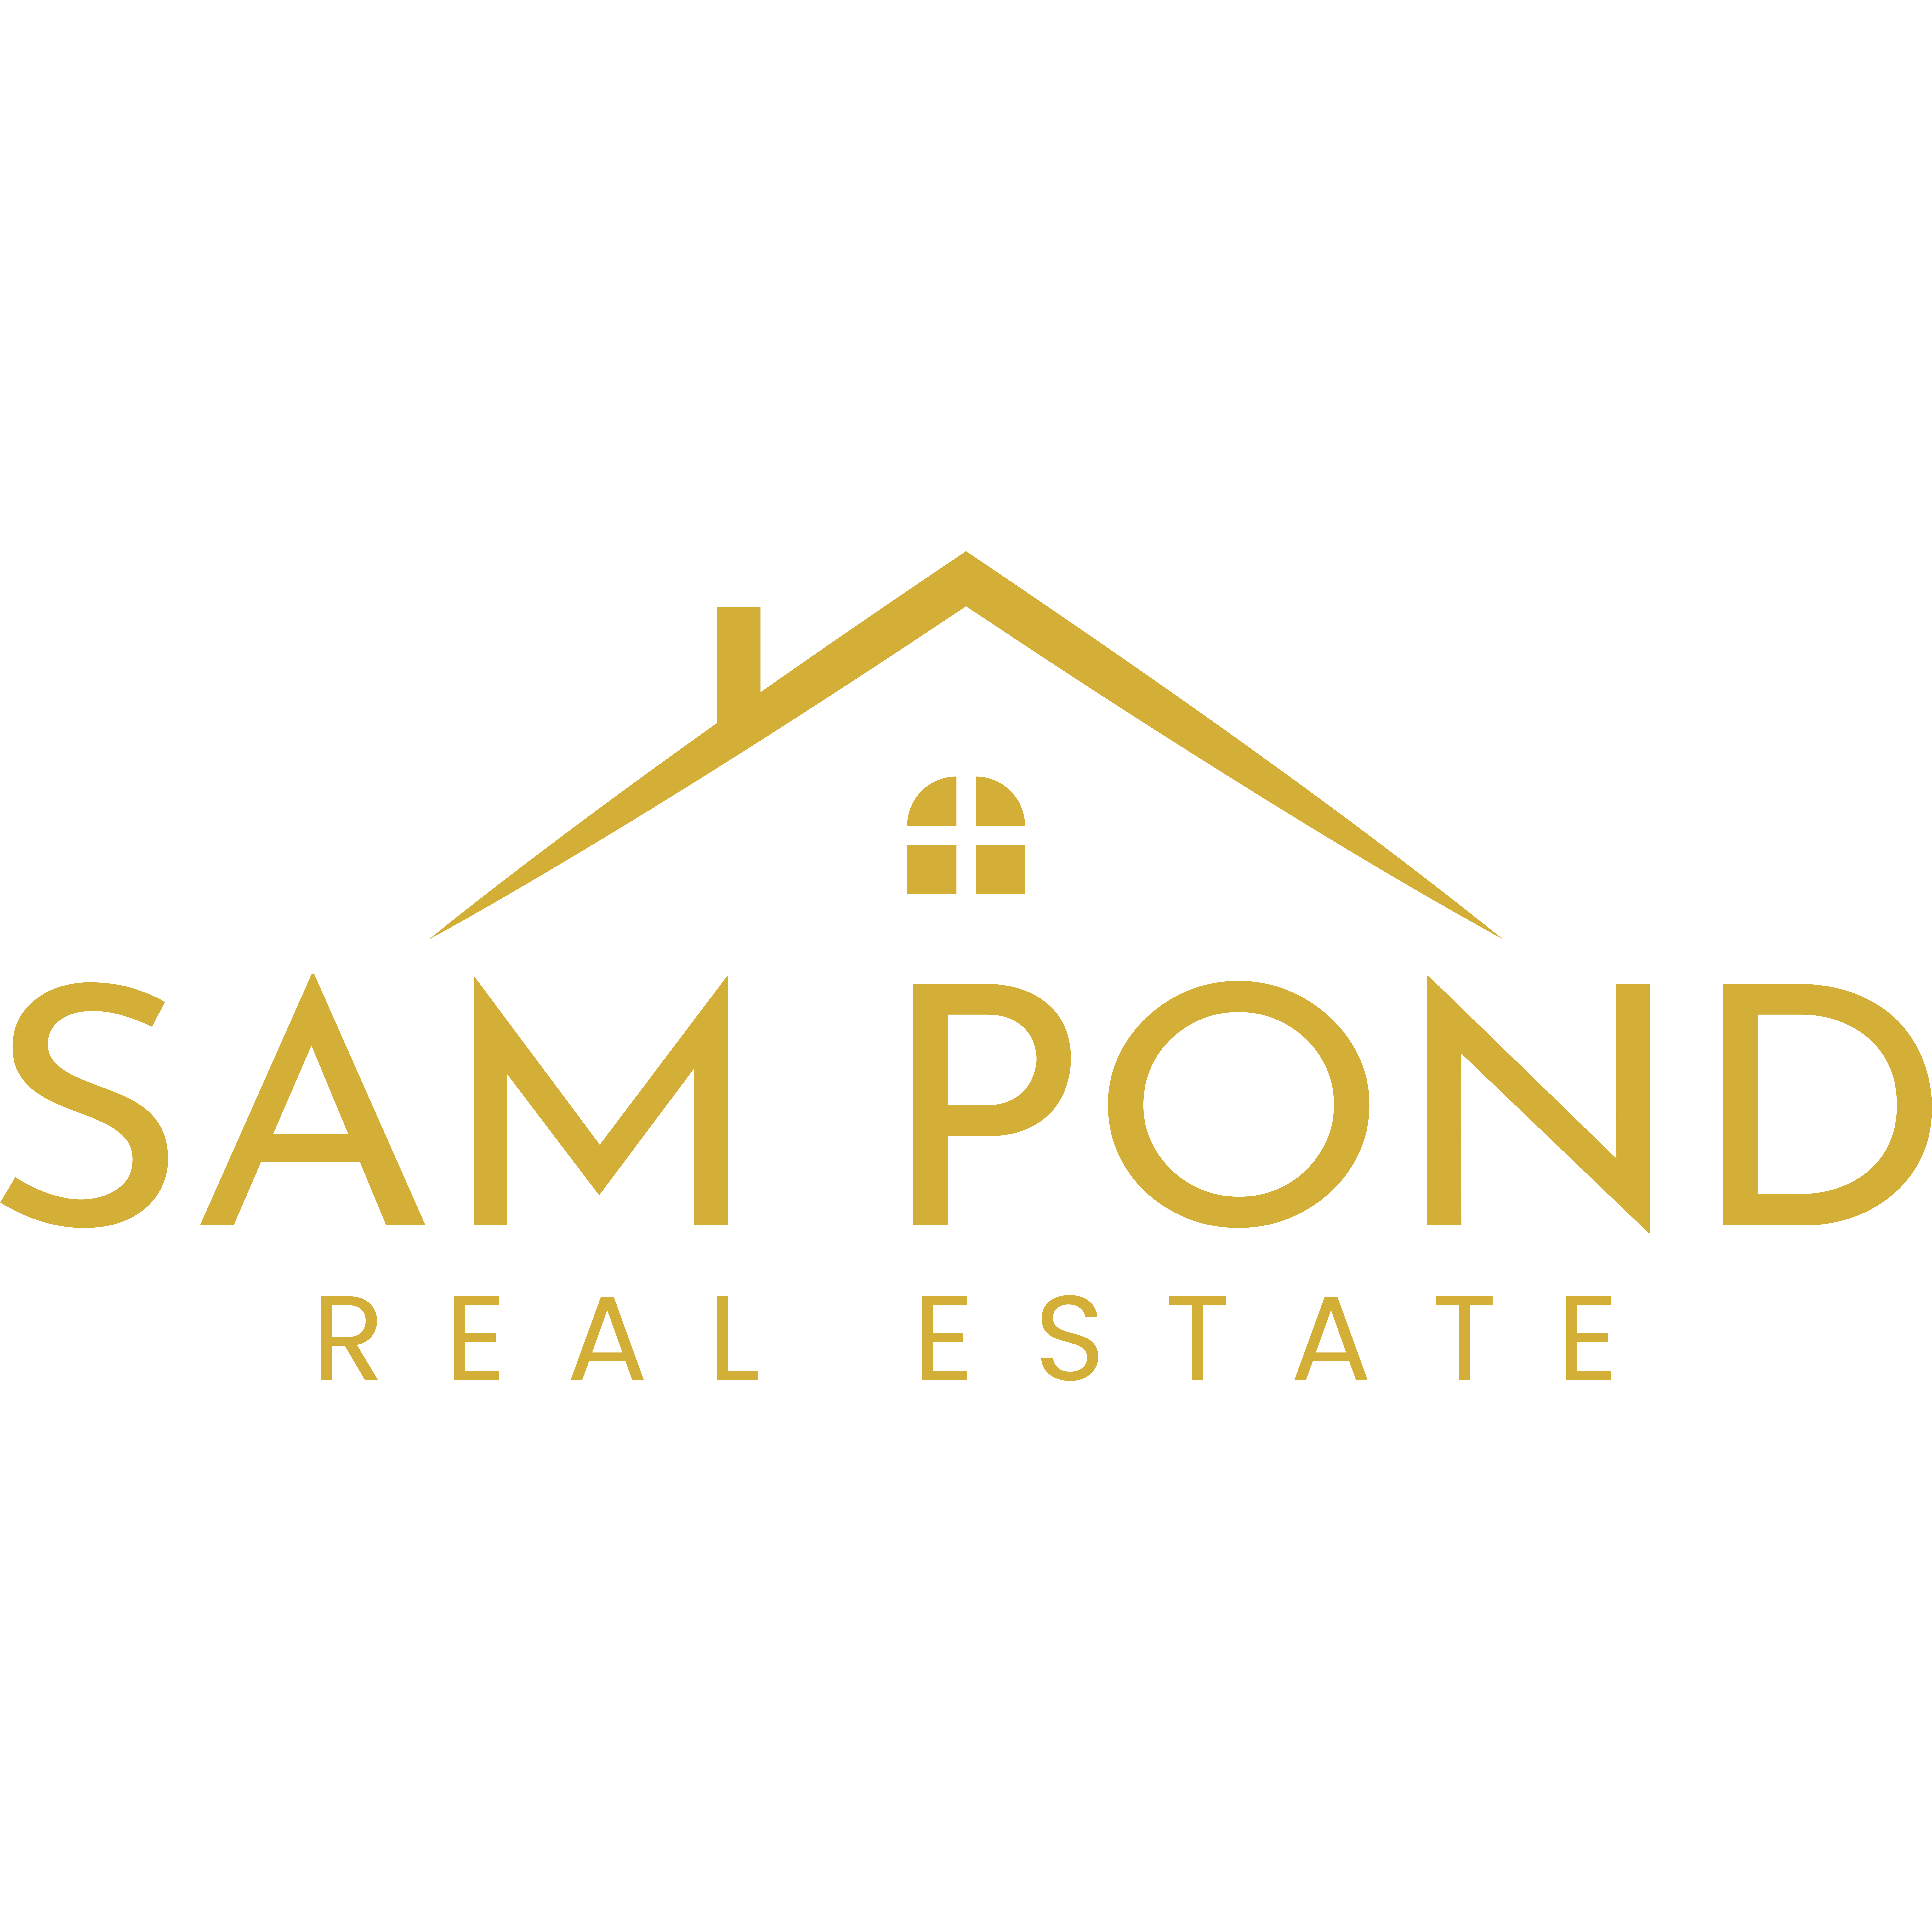 Sam Pond, REALTOR | Sam Pond Real Estate